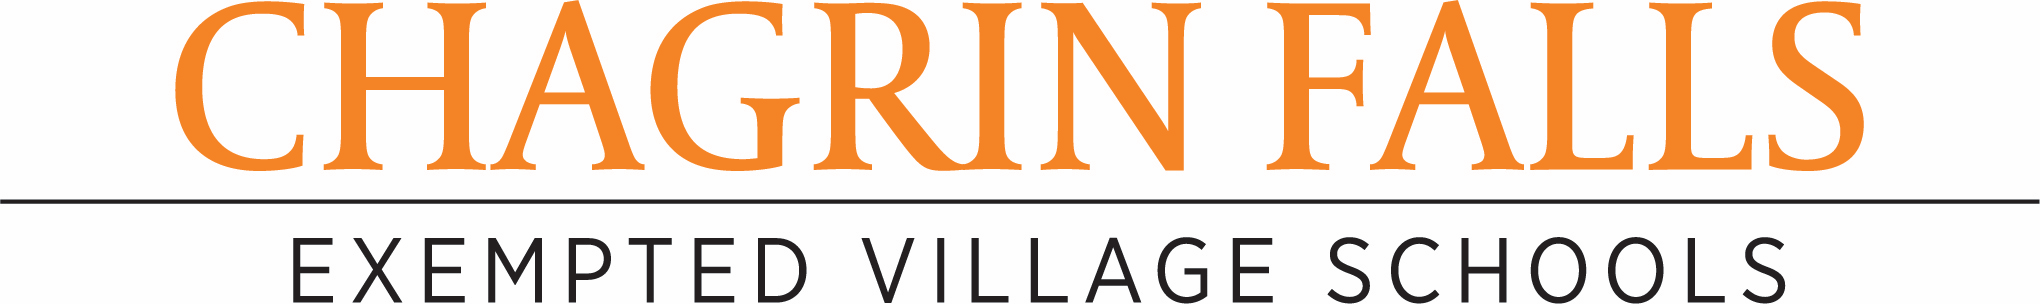 Chagrin Falls Exempted Village Schools logo